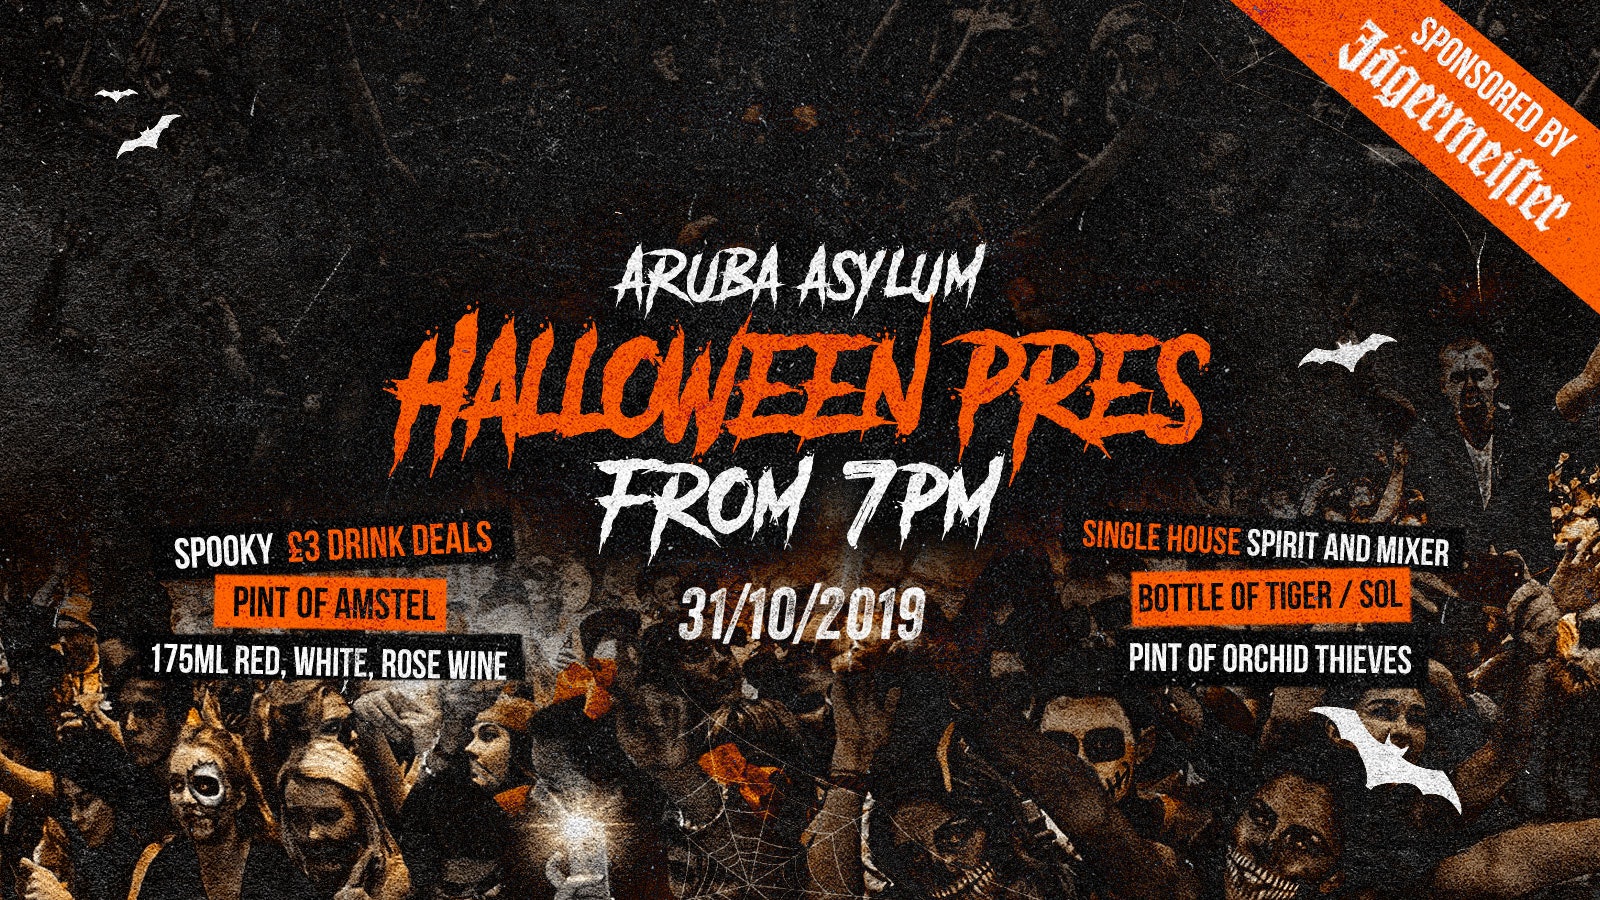 Aruba Asylum Halloween Pres at 7PM